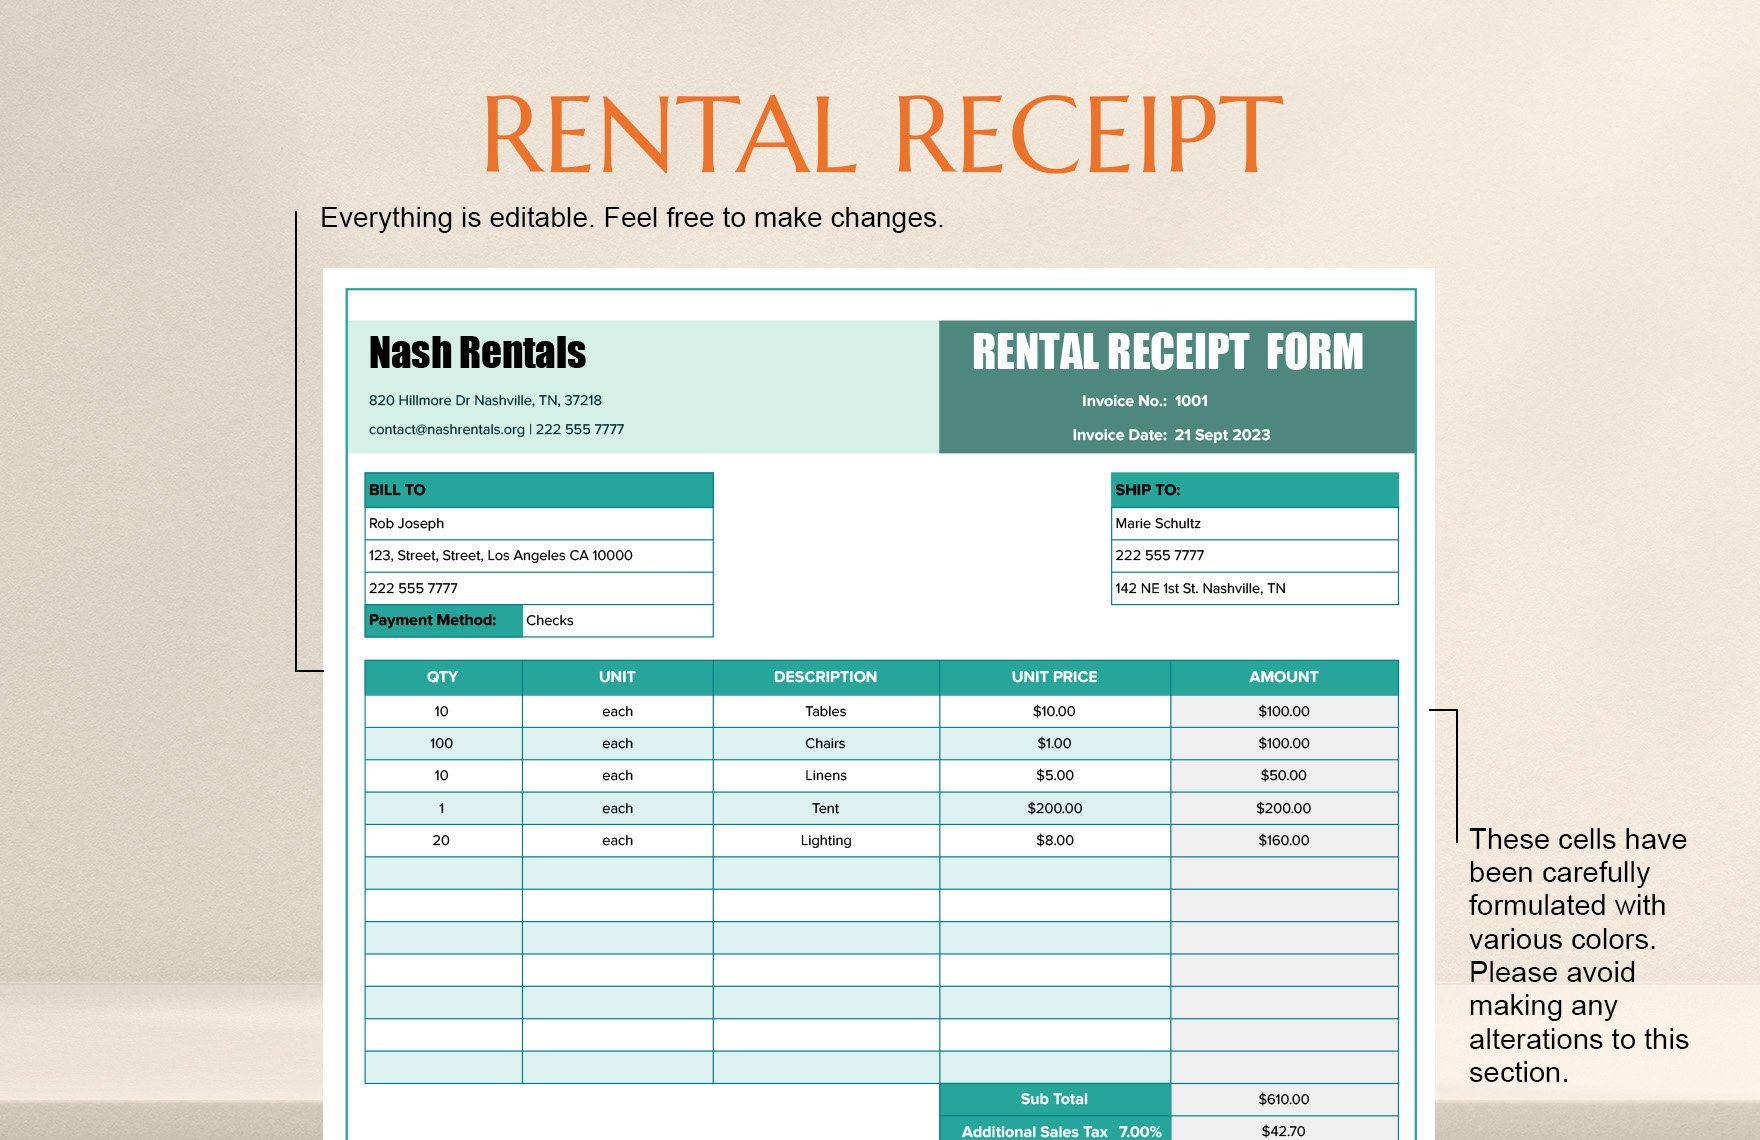 Rental Receipt Form